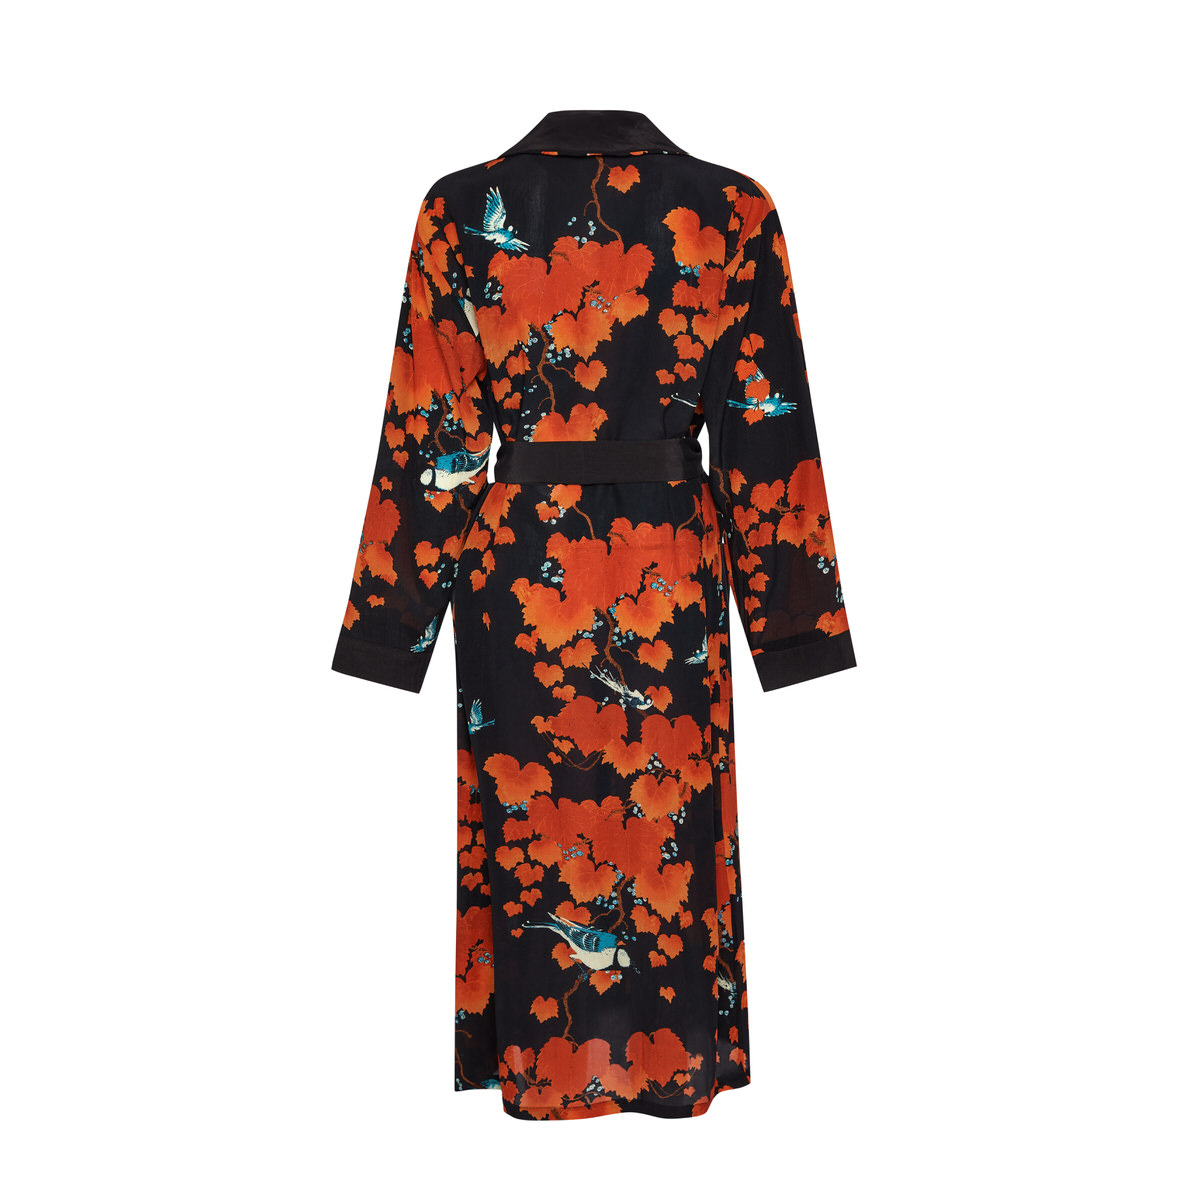 New Look Women's Dress Sewing Pattern 6340 | Hobbycraft